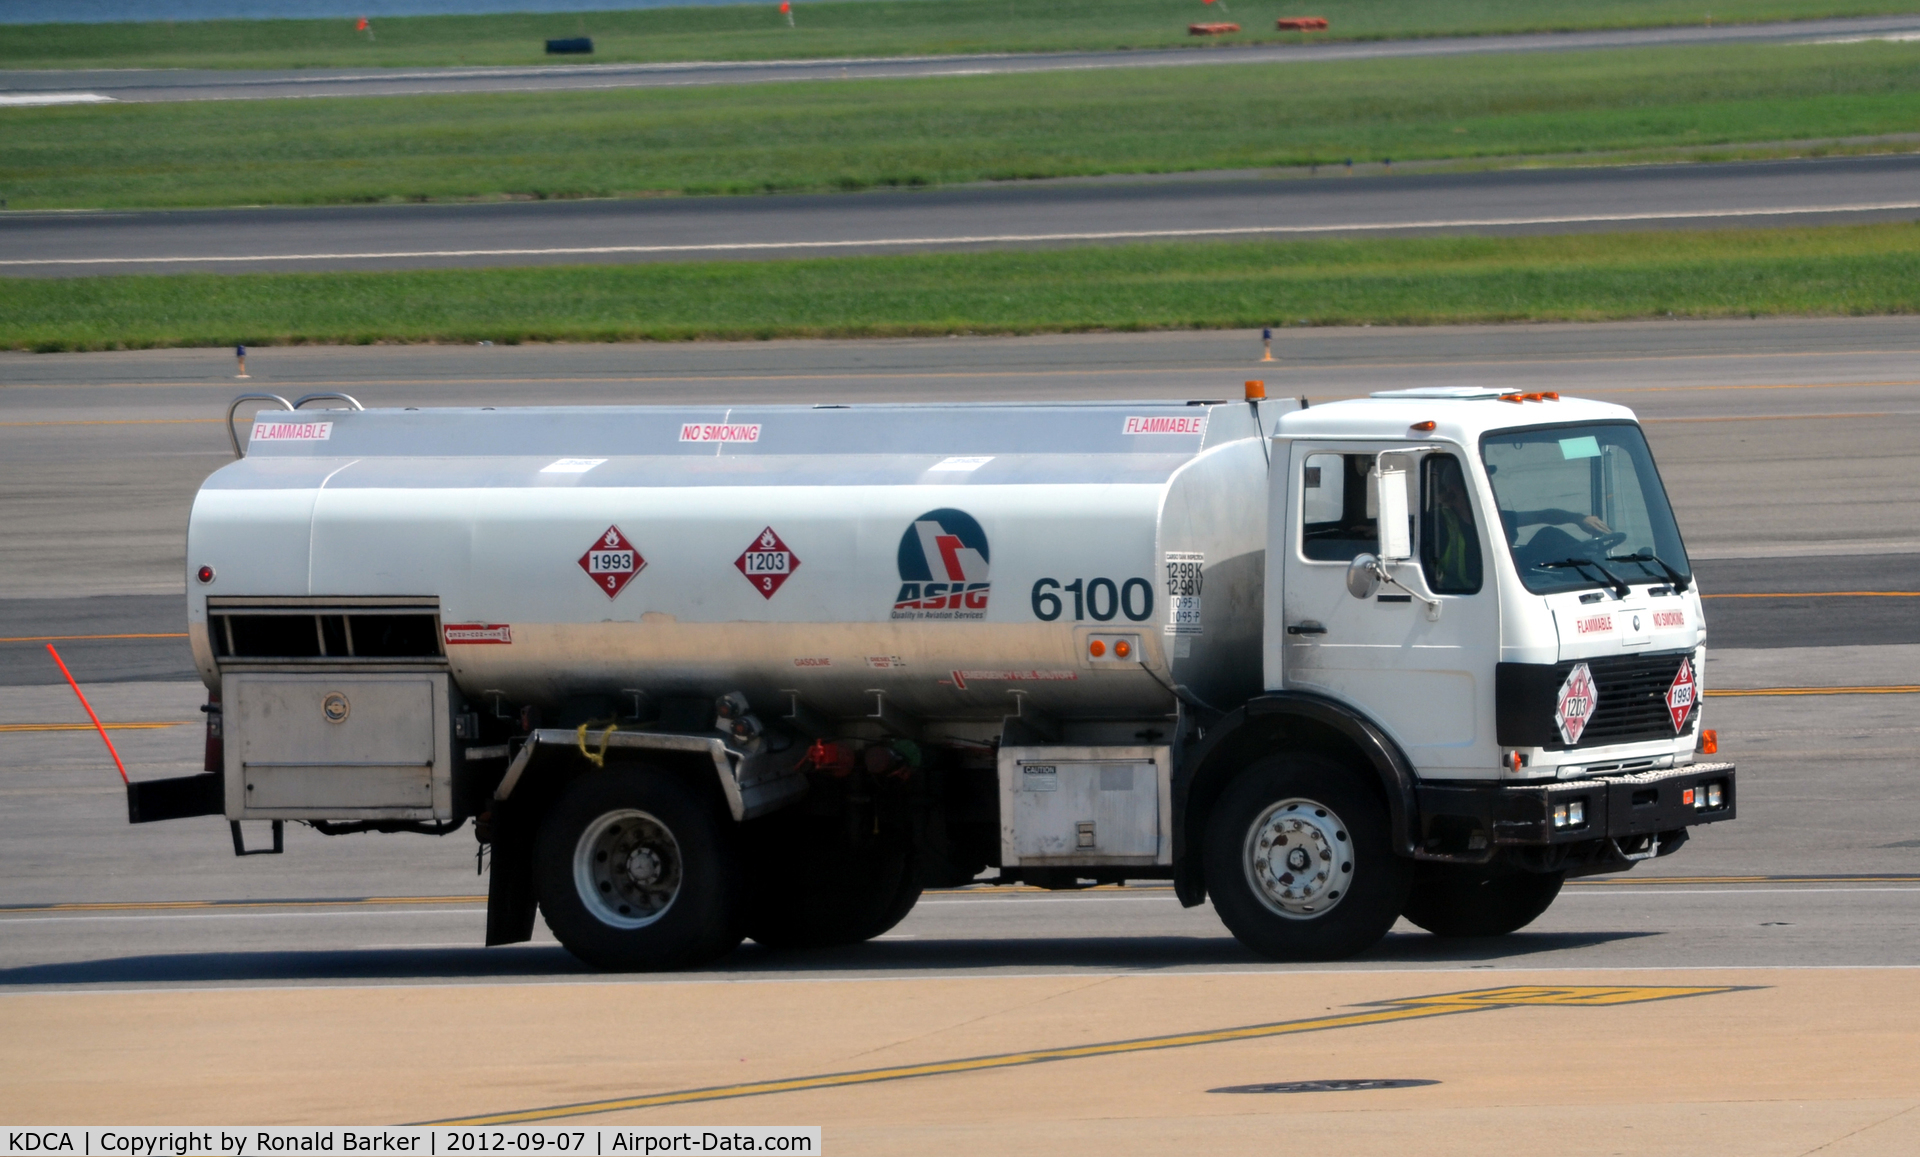 Ronald Reagan Washington National Airport (DCA) - Fuel truck 6100